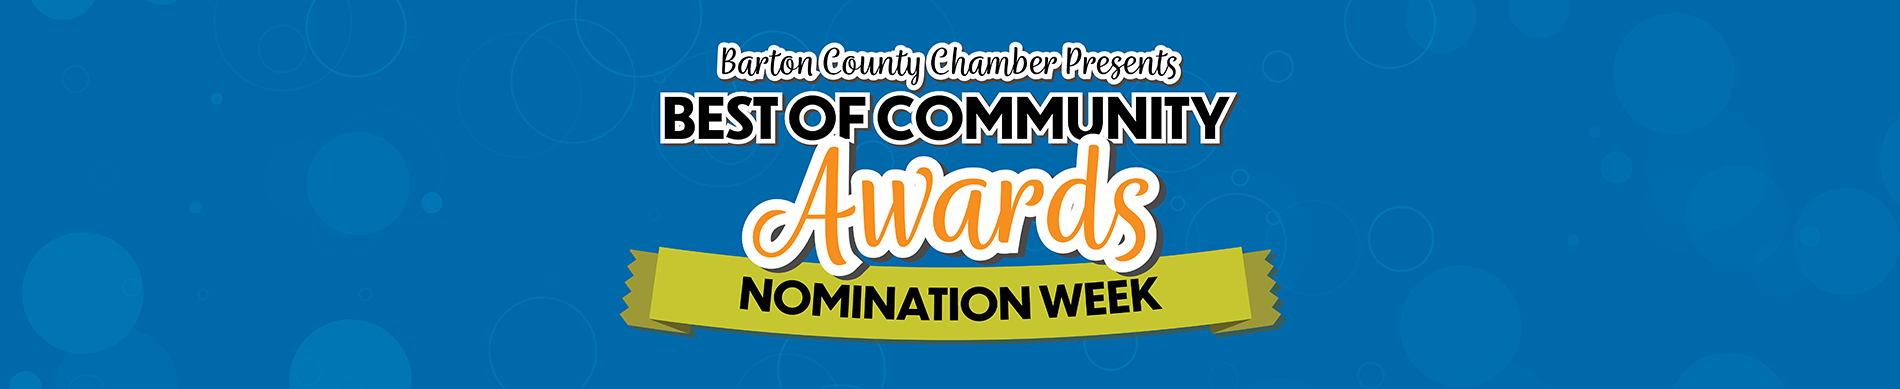 Best Of Community Awards Nomination Week